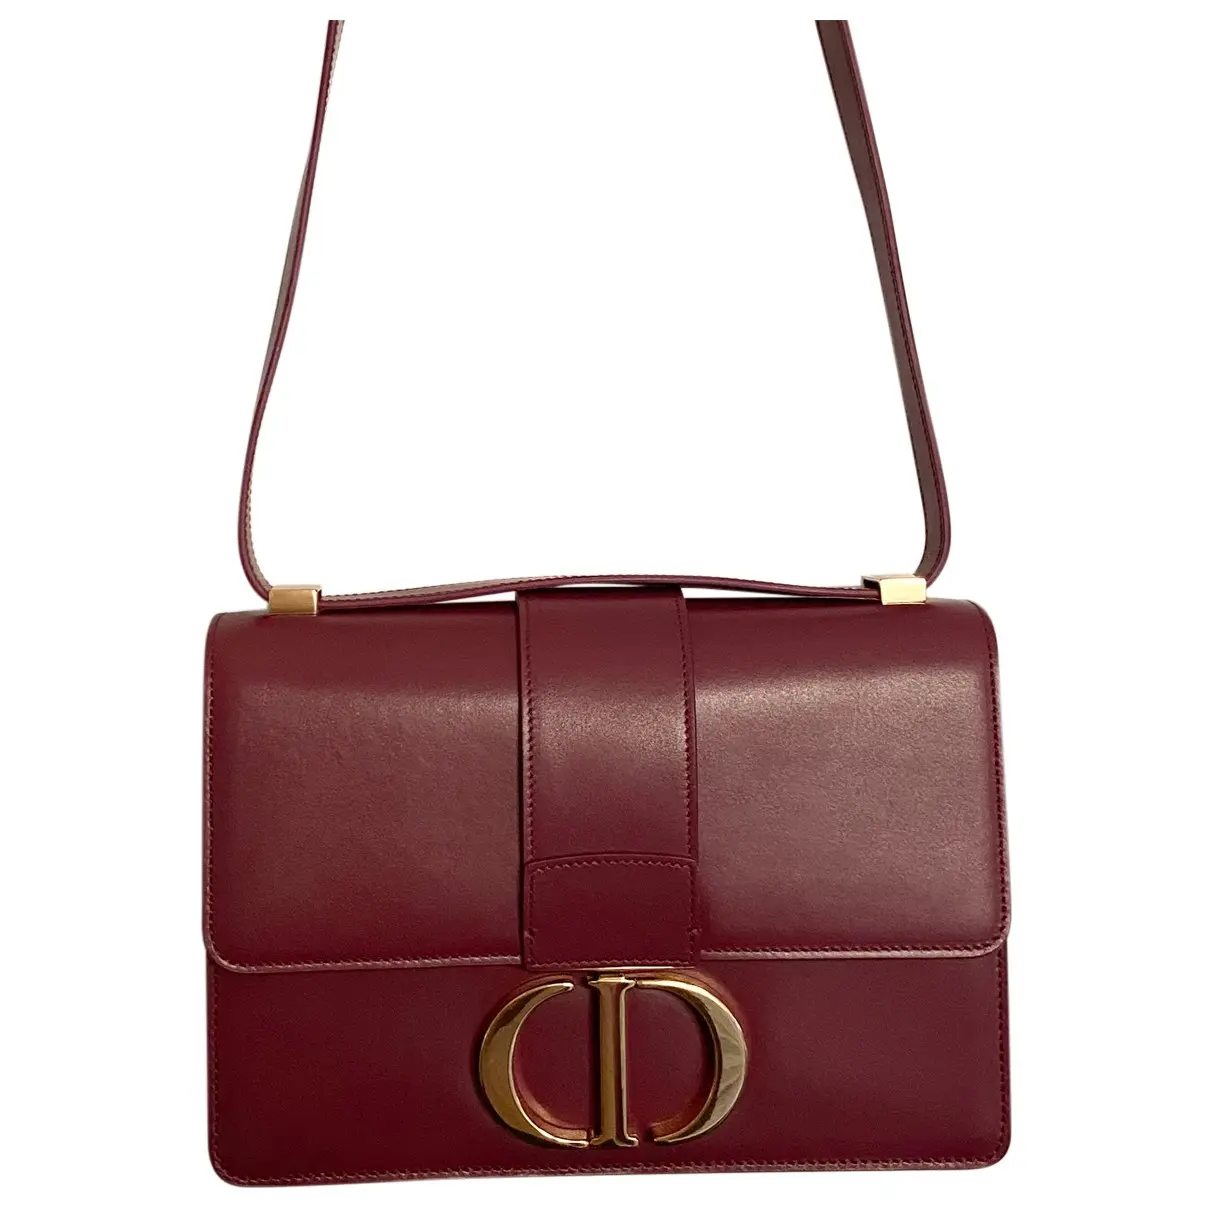 30 Montaigne leather handbag Dior